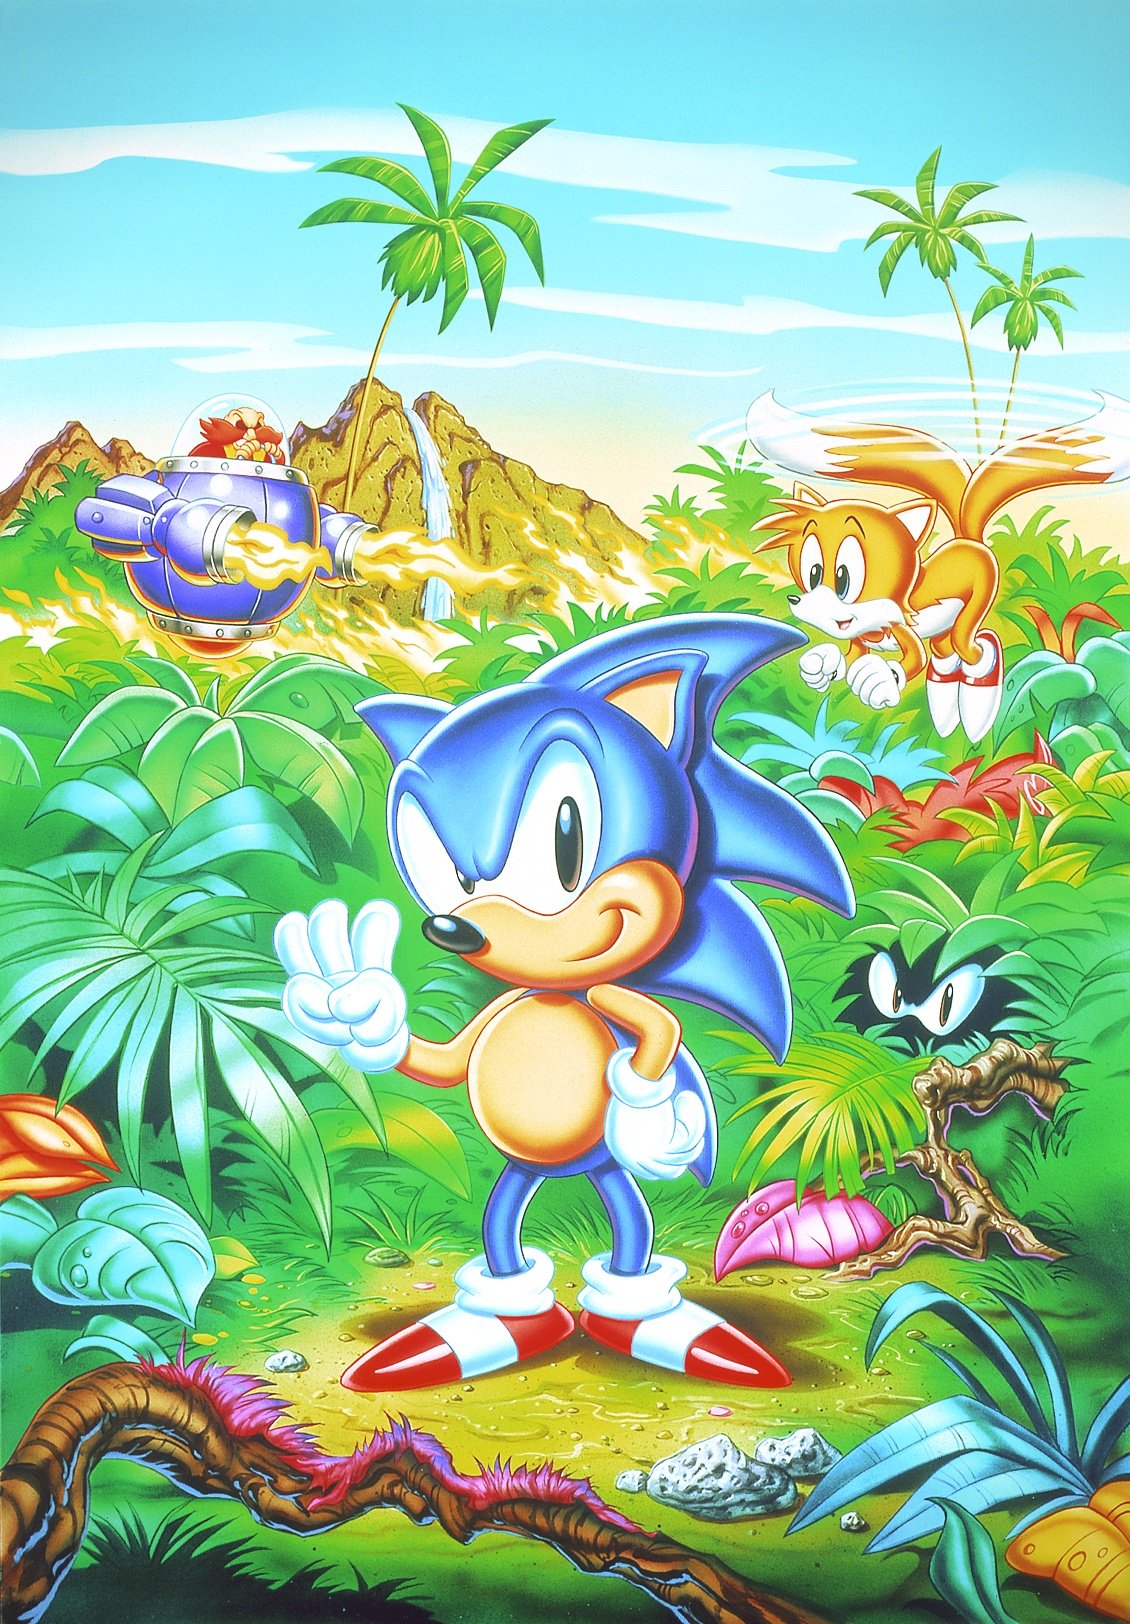 ArtStation - Sonic the hedgehog 3 promo